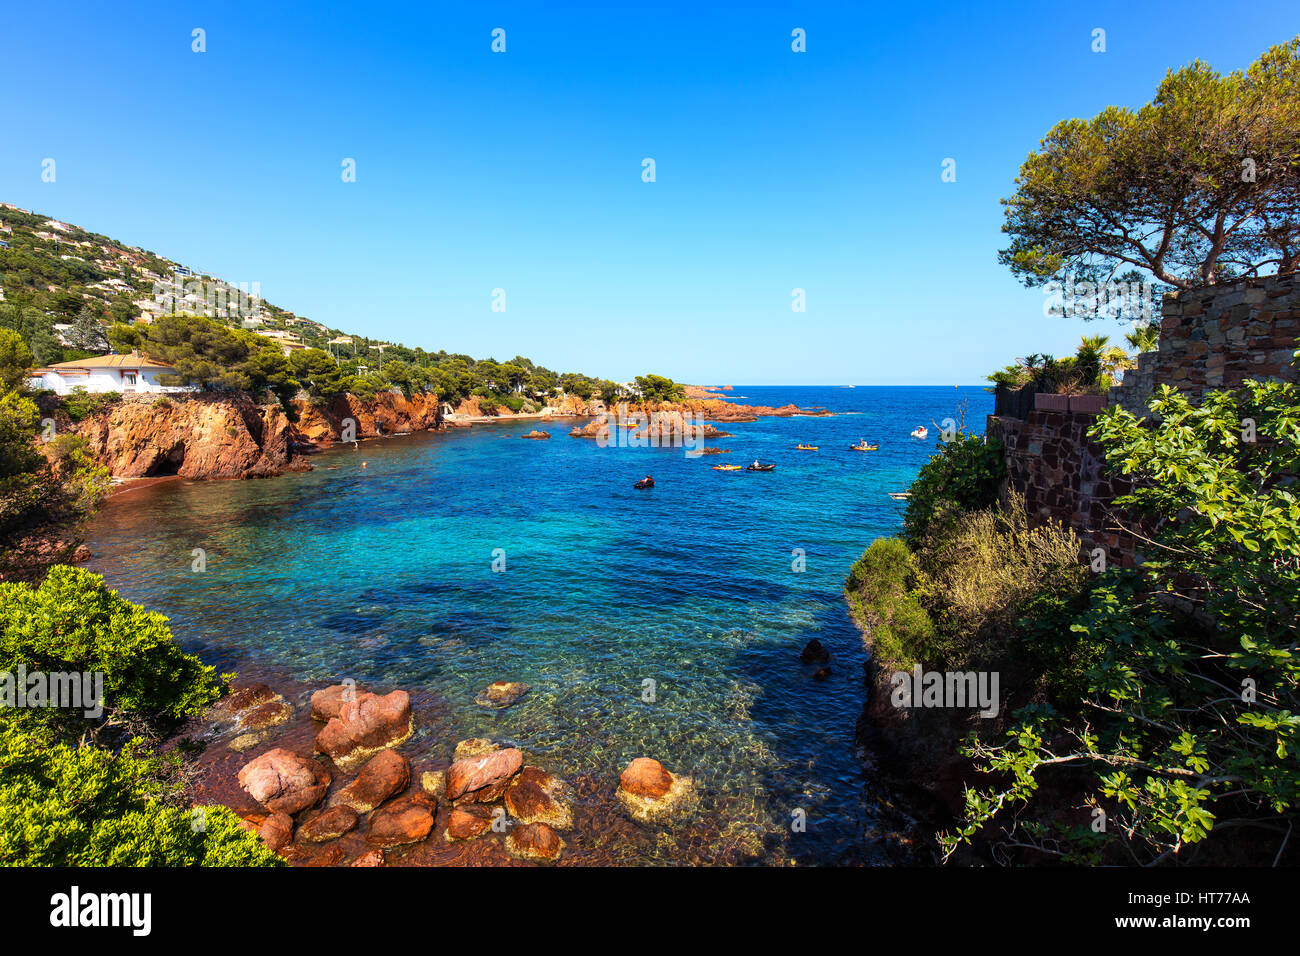 Esterel mediterranean red rocks coast, beach and sea. French Riviera in Cote d Azur near Saint Raphael, Provence, France, Europe. Stock Photo